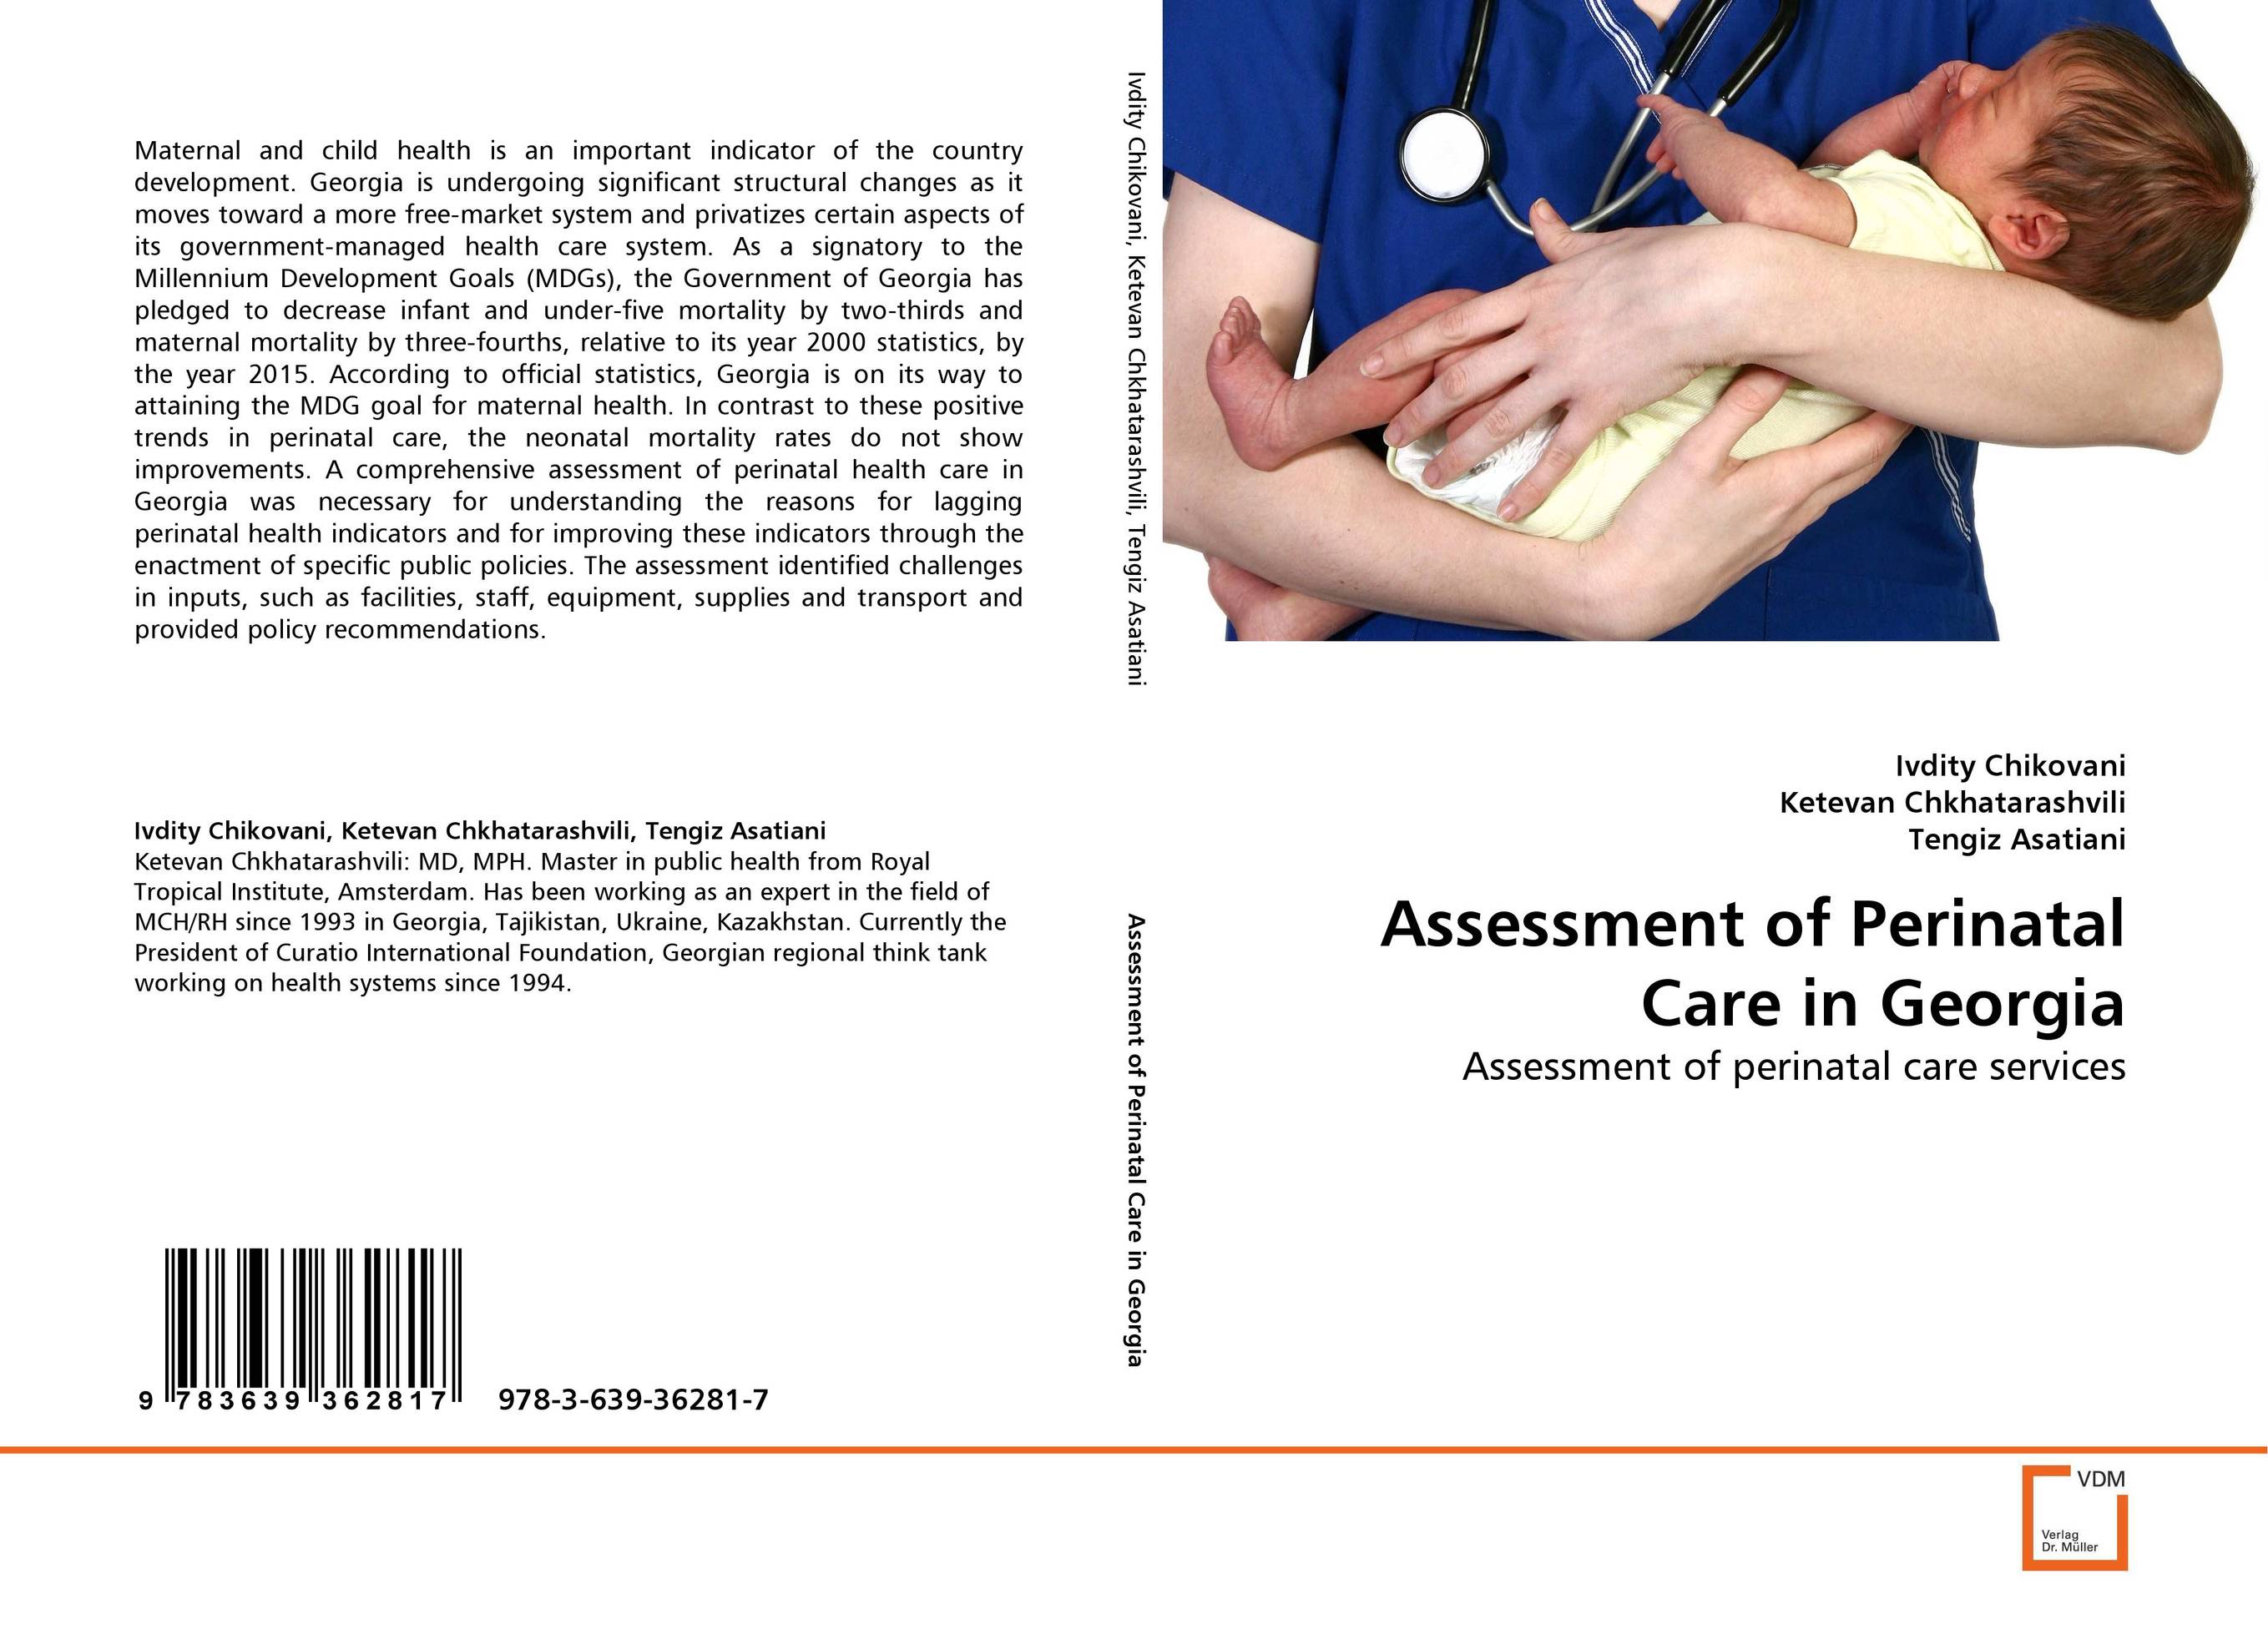 Assessment of Perinatal Care in Georgia